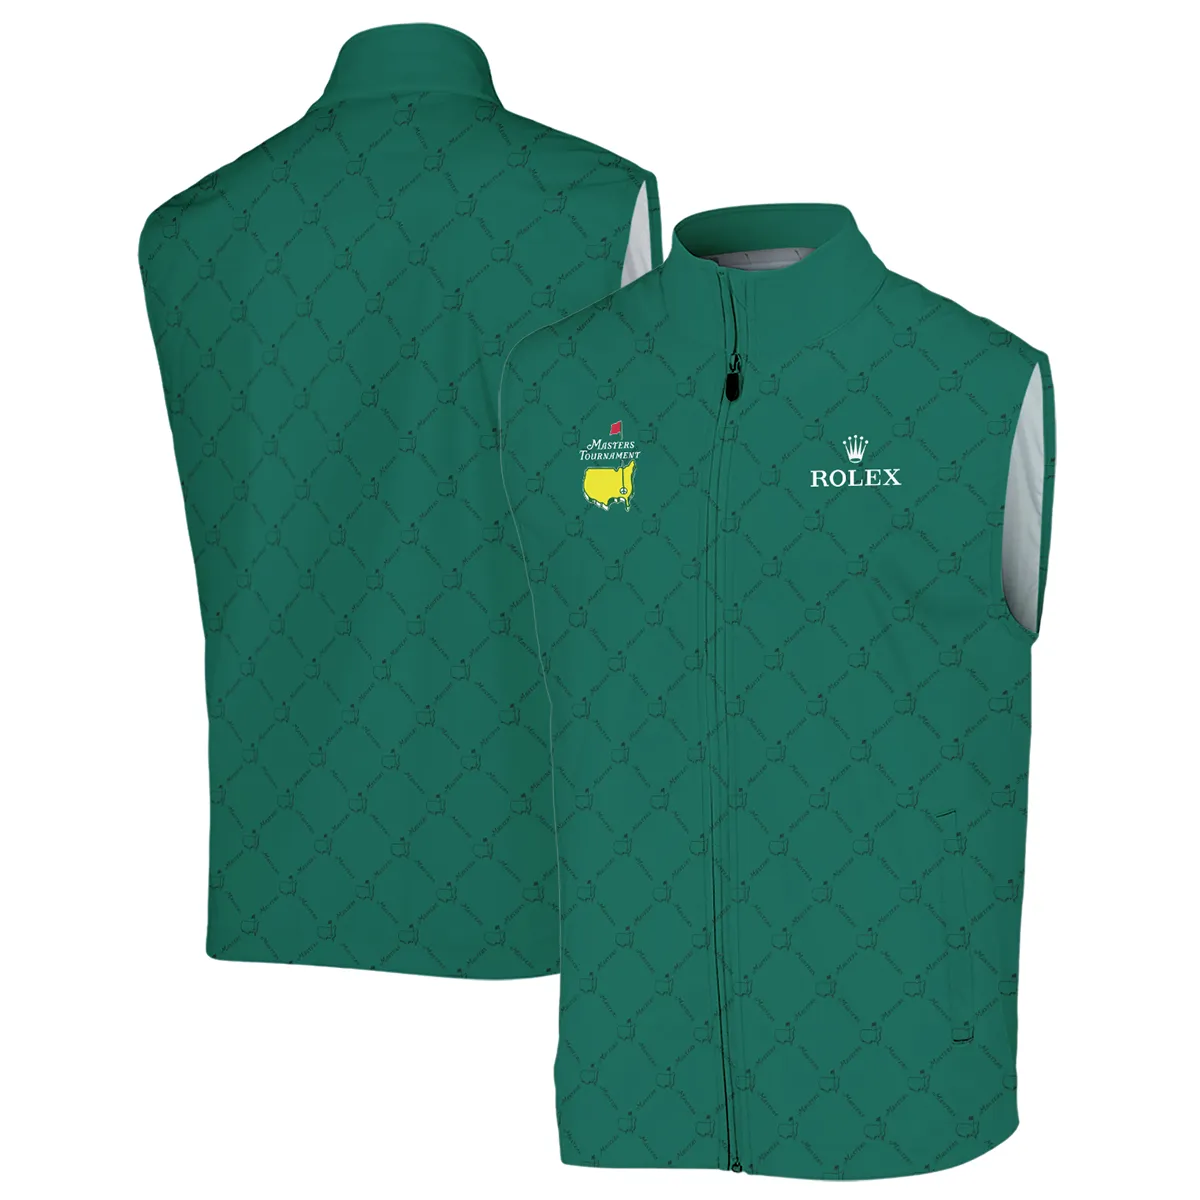 Golf Sport Pattern Color Green Mix Black Masters Tournament Rolex Zipper Hoodie Shirt Style Classic